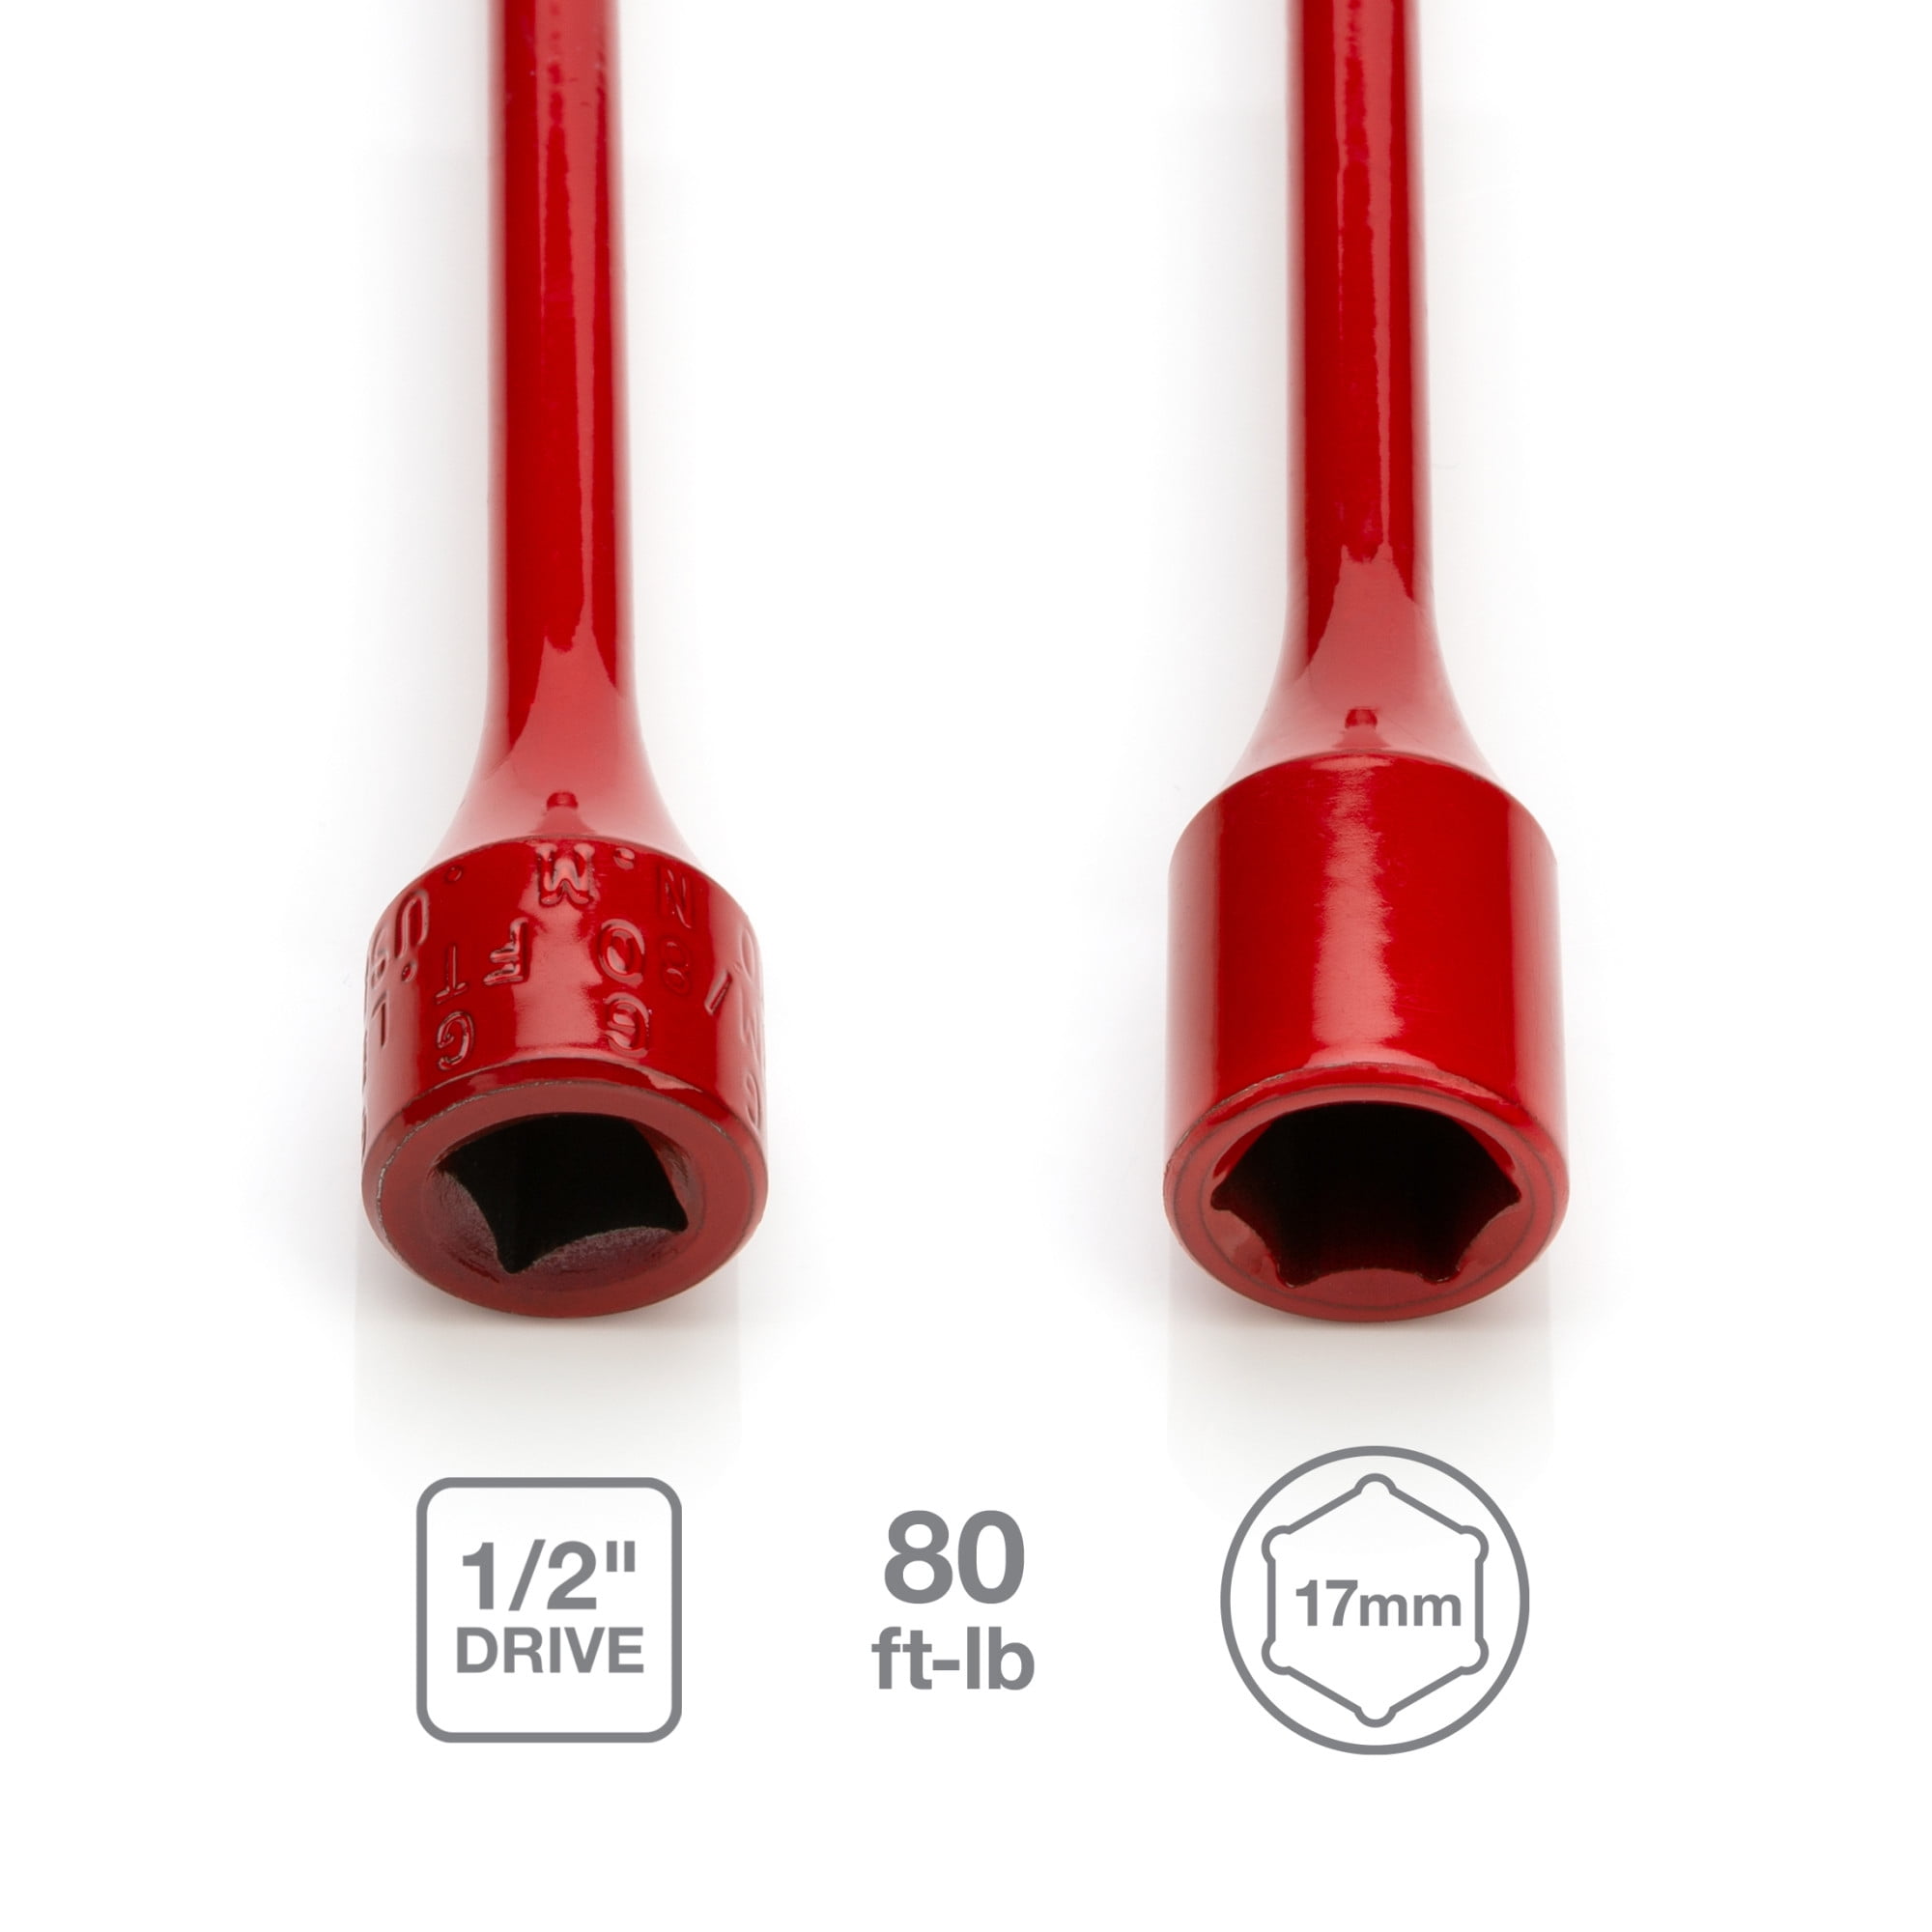 Steelman 50068 1/2-Inch Drive x 17mm 80 ft-lb Torque Stick Red 